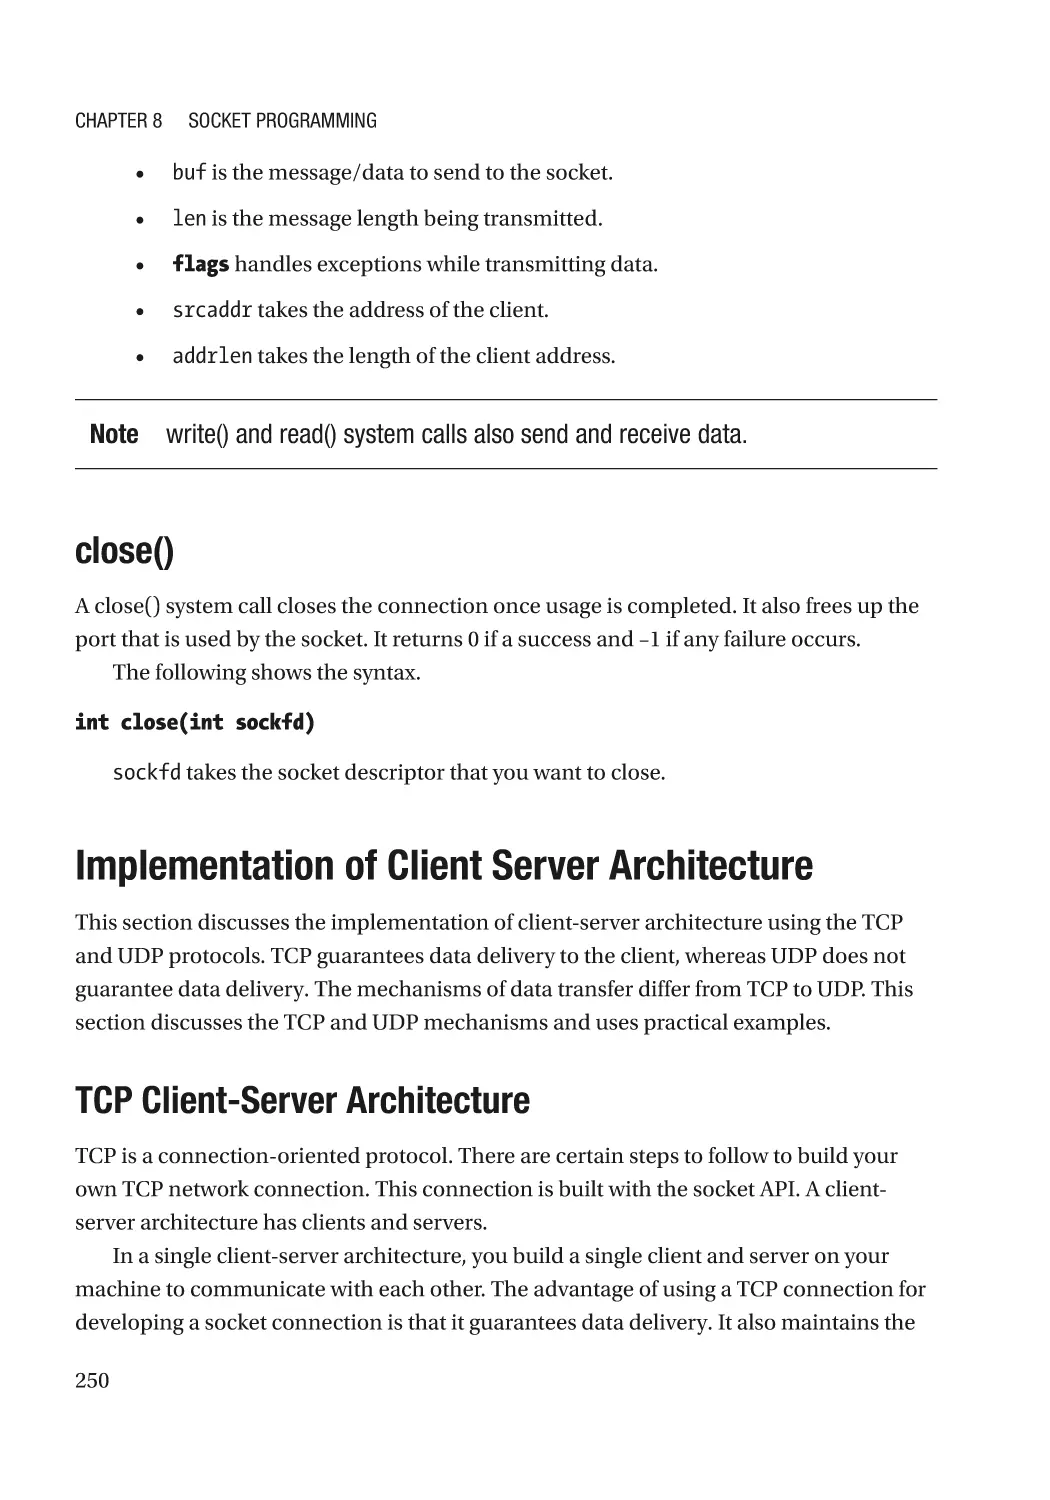 close()
Implementation of Client Server Architecture
TCP Client-Server Architecture